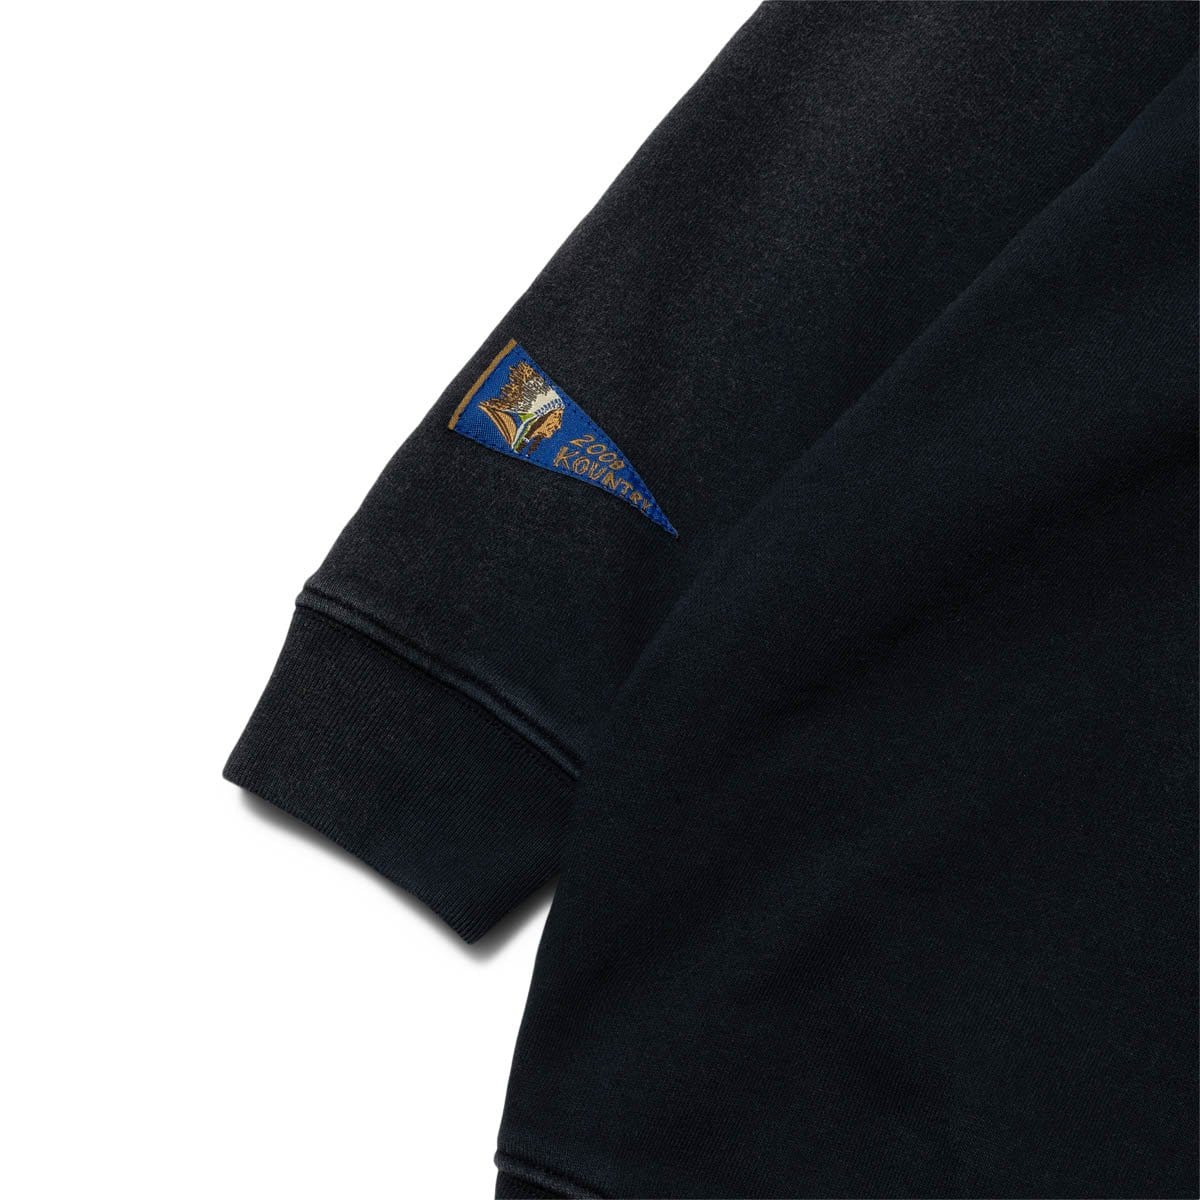 Kapital Hoodies & Sweatshirts BLACK/PURPLE / O/S FLEECE KNIT 2TONES REMAKE BIG SWT (BONE)